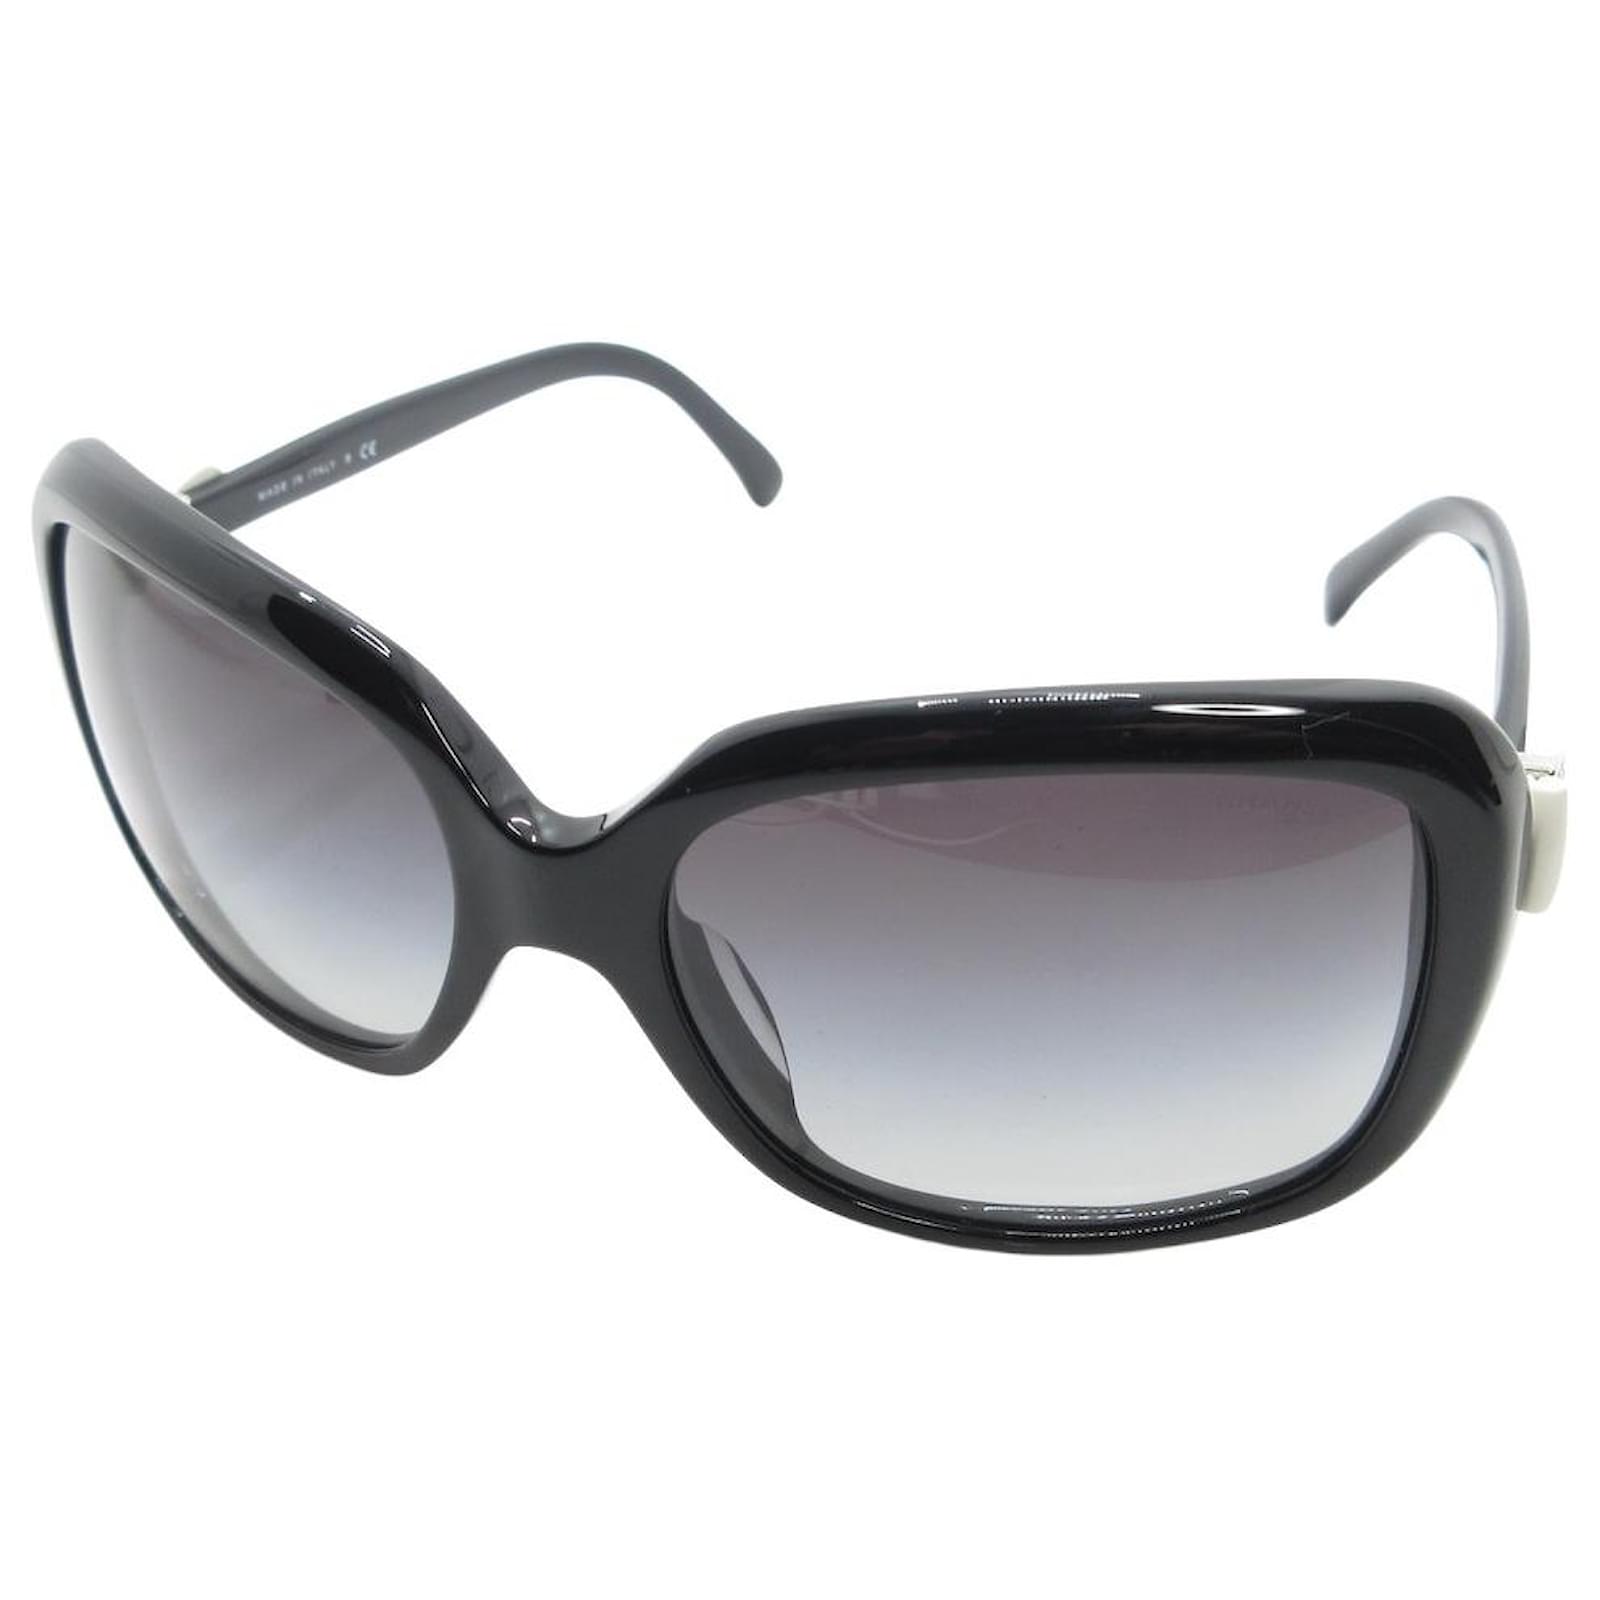 chanel bow sunglasses 5171